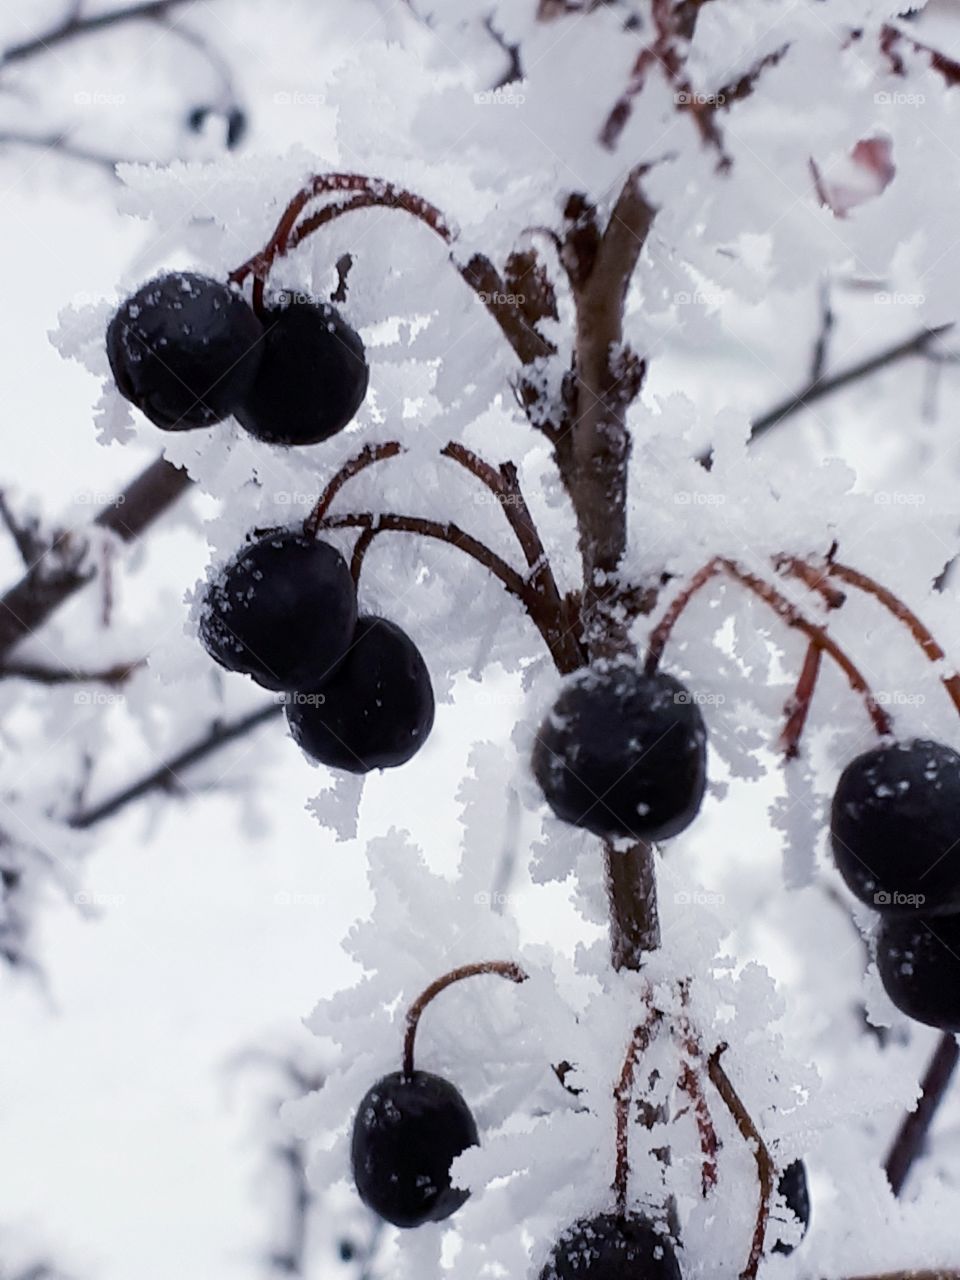 Shrub with black fruits under snow